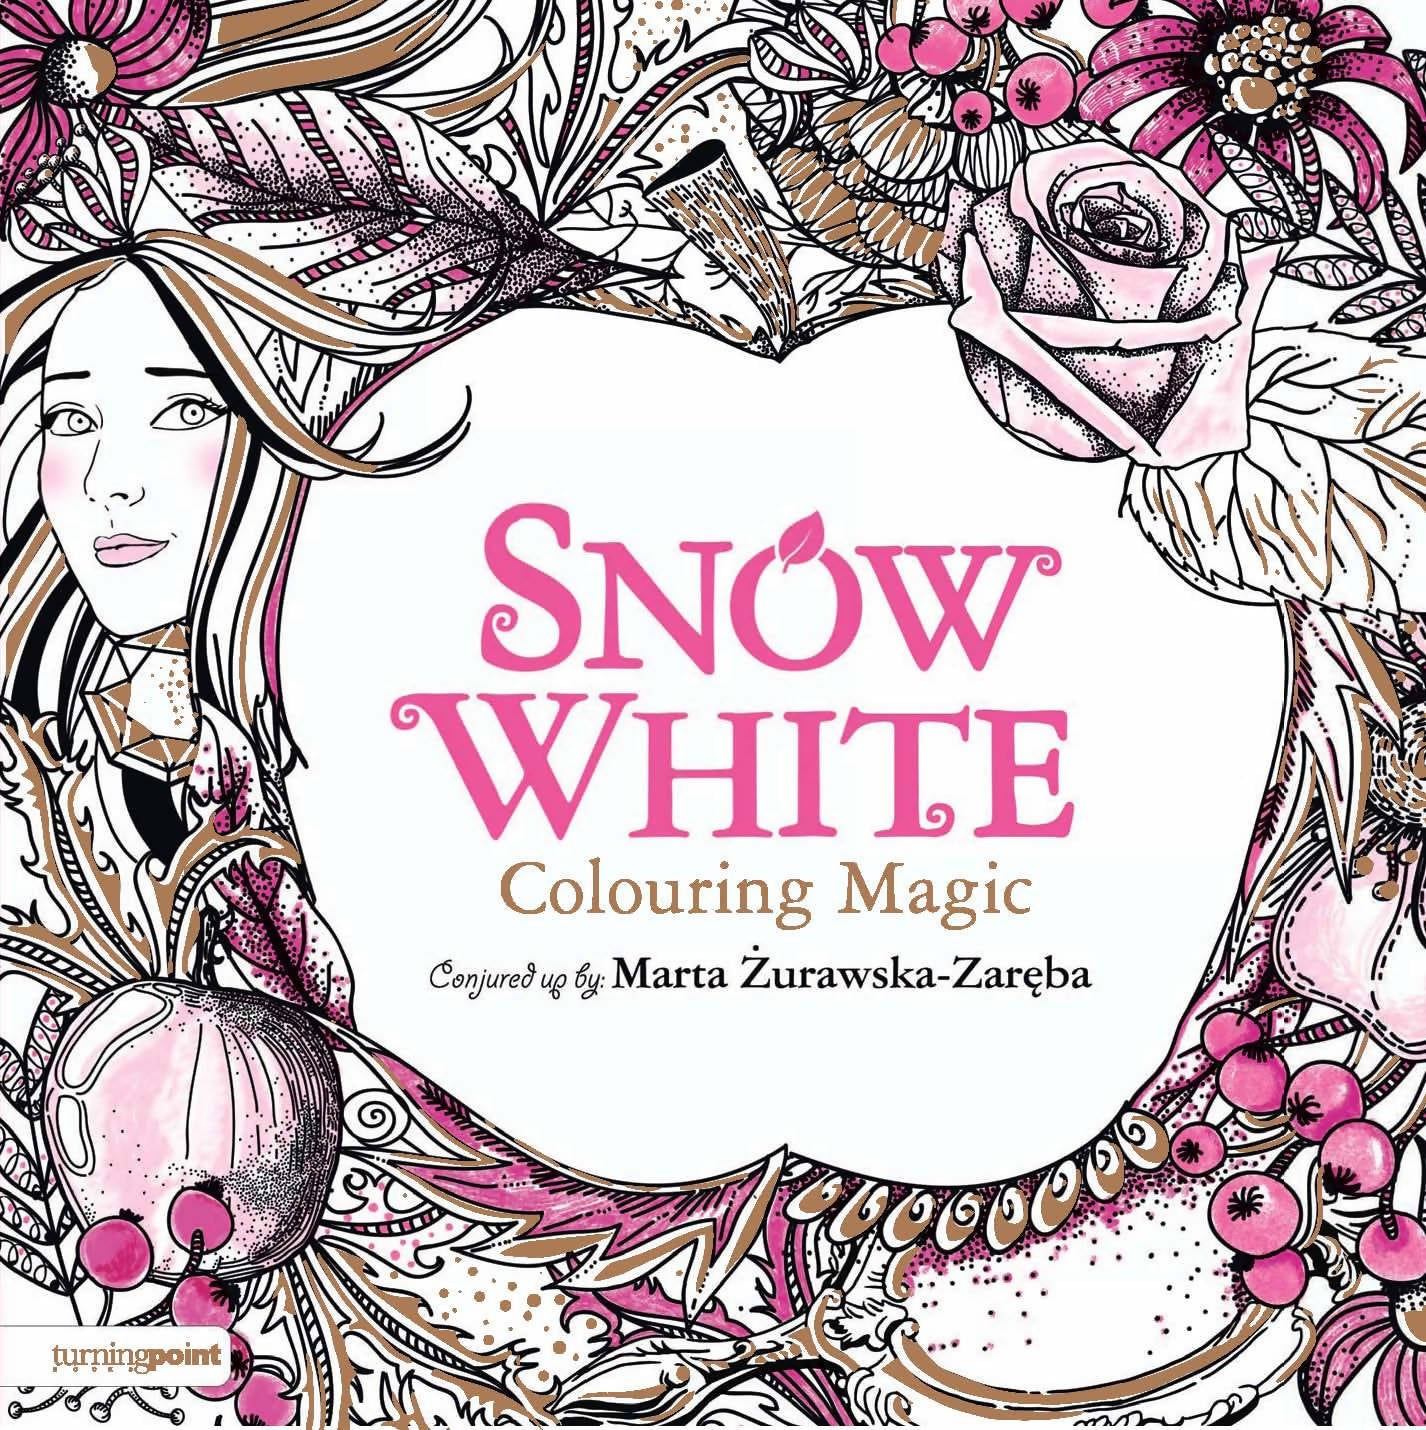 Snow White – Coloring Magic